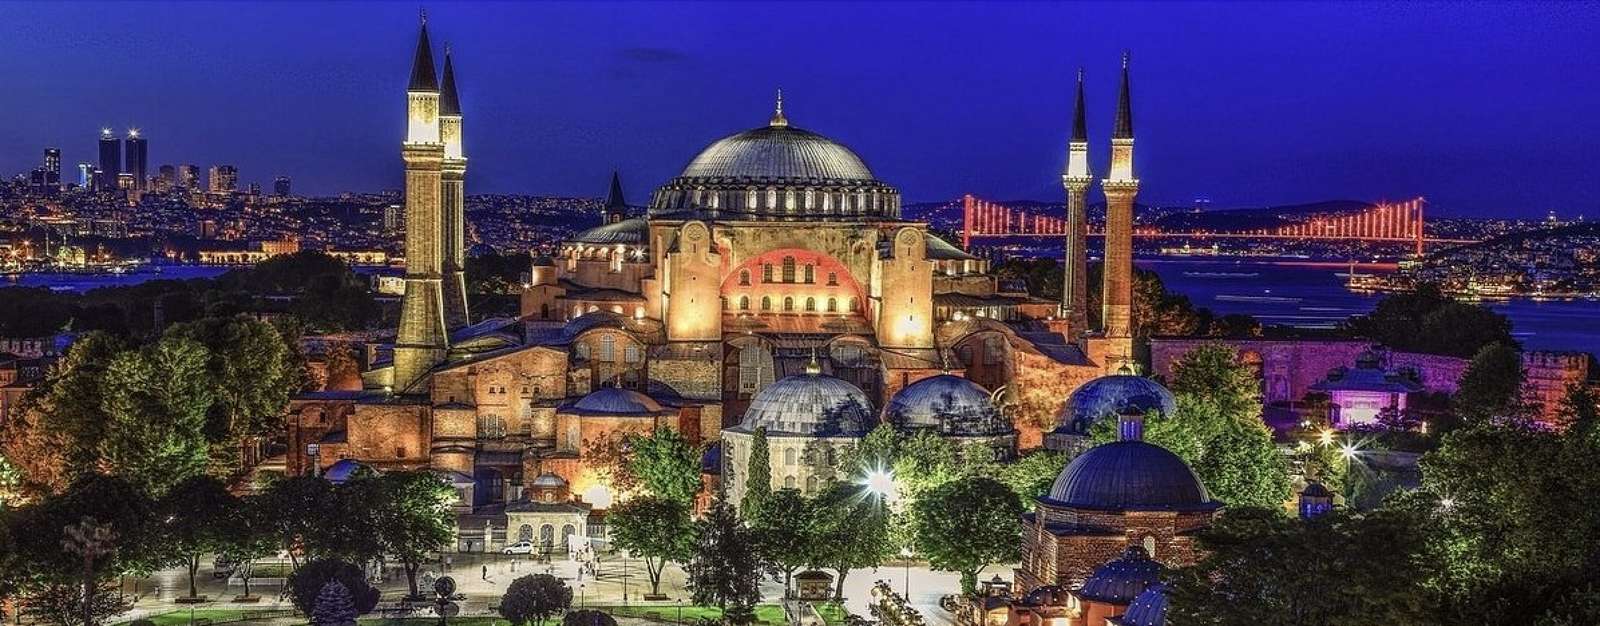 Hagia Sophia, Turecko puzzle online z fotografie